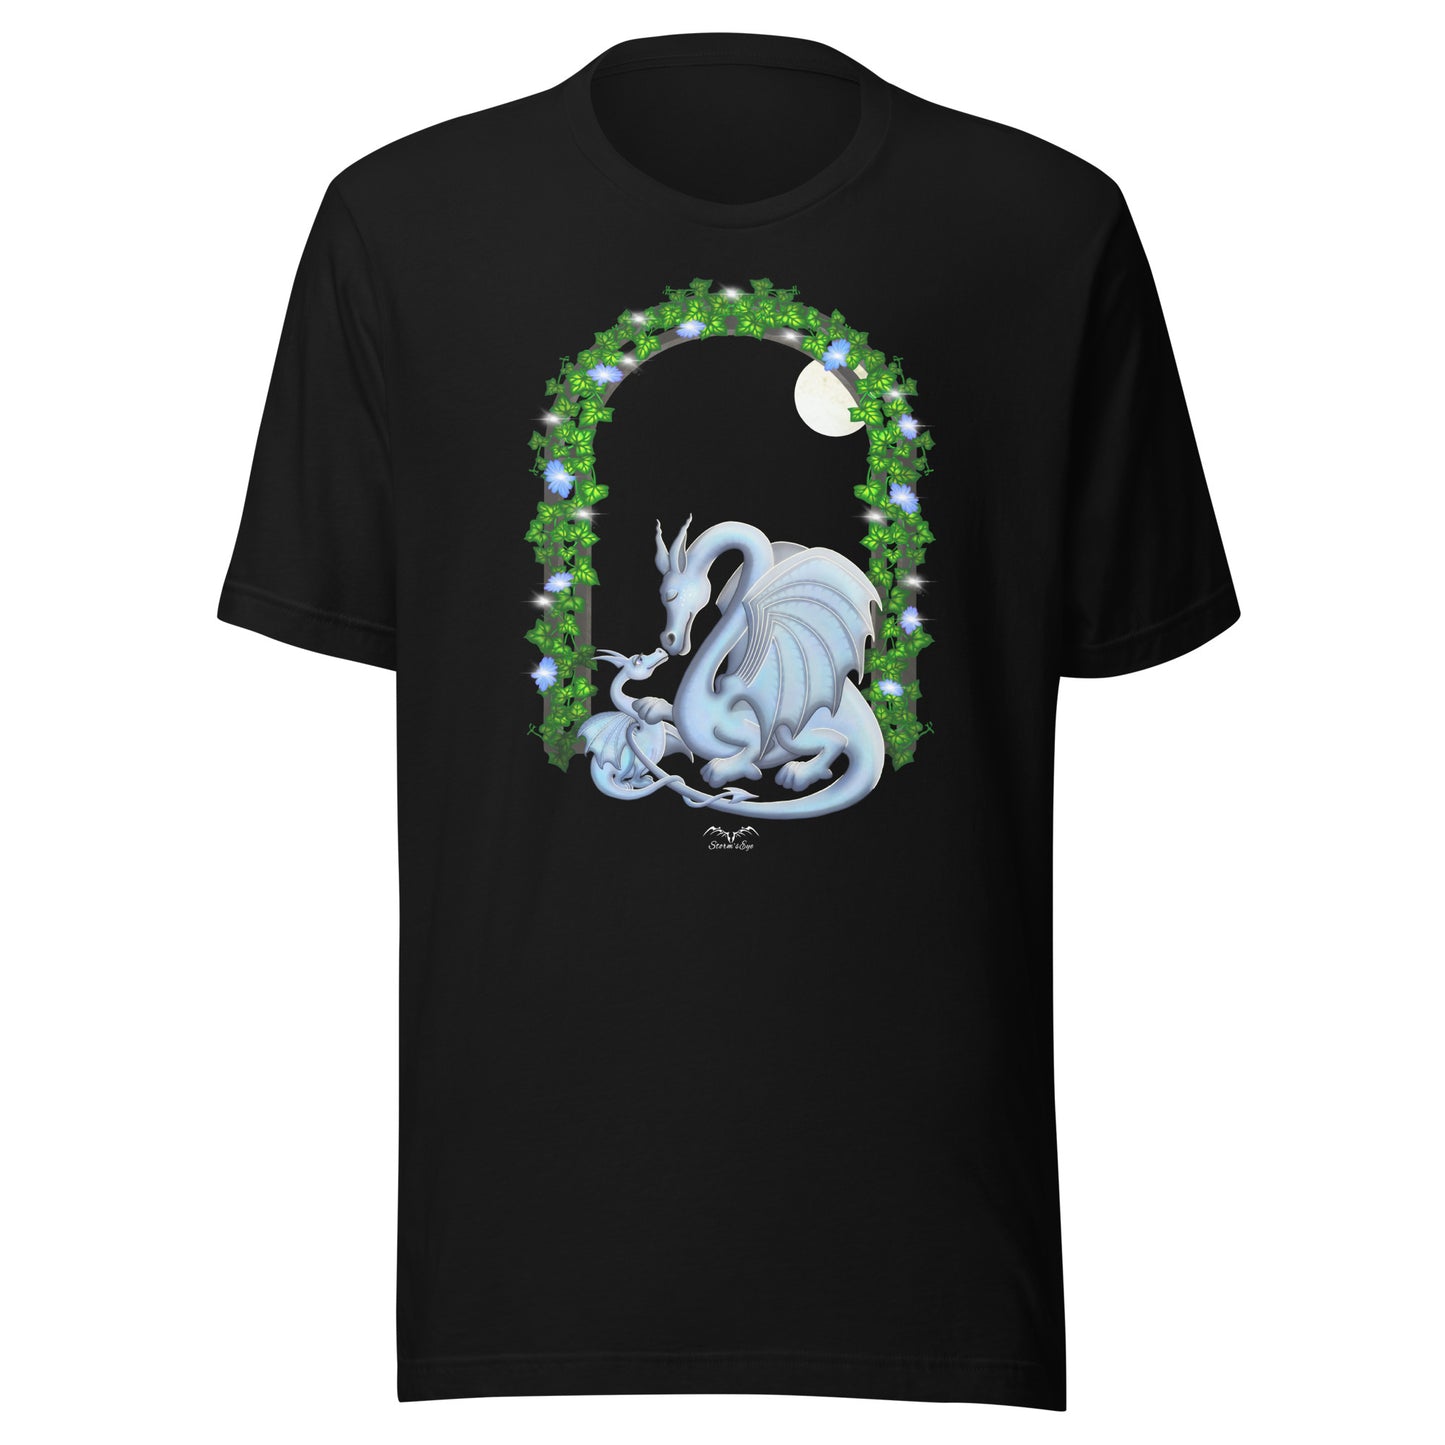 Mum and baby dragon T-shirt, black, by Stormseye Design